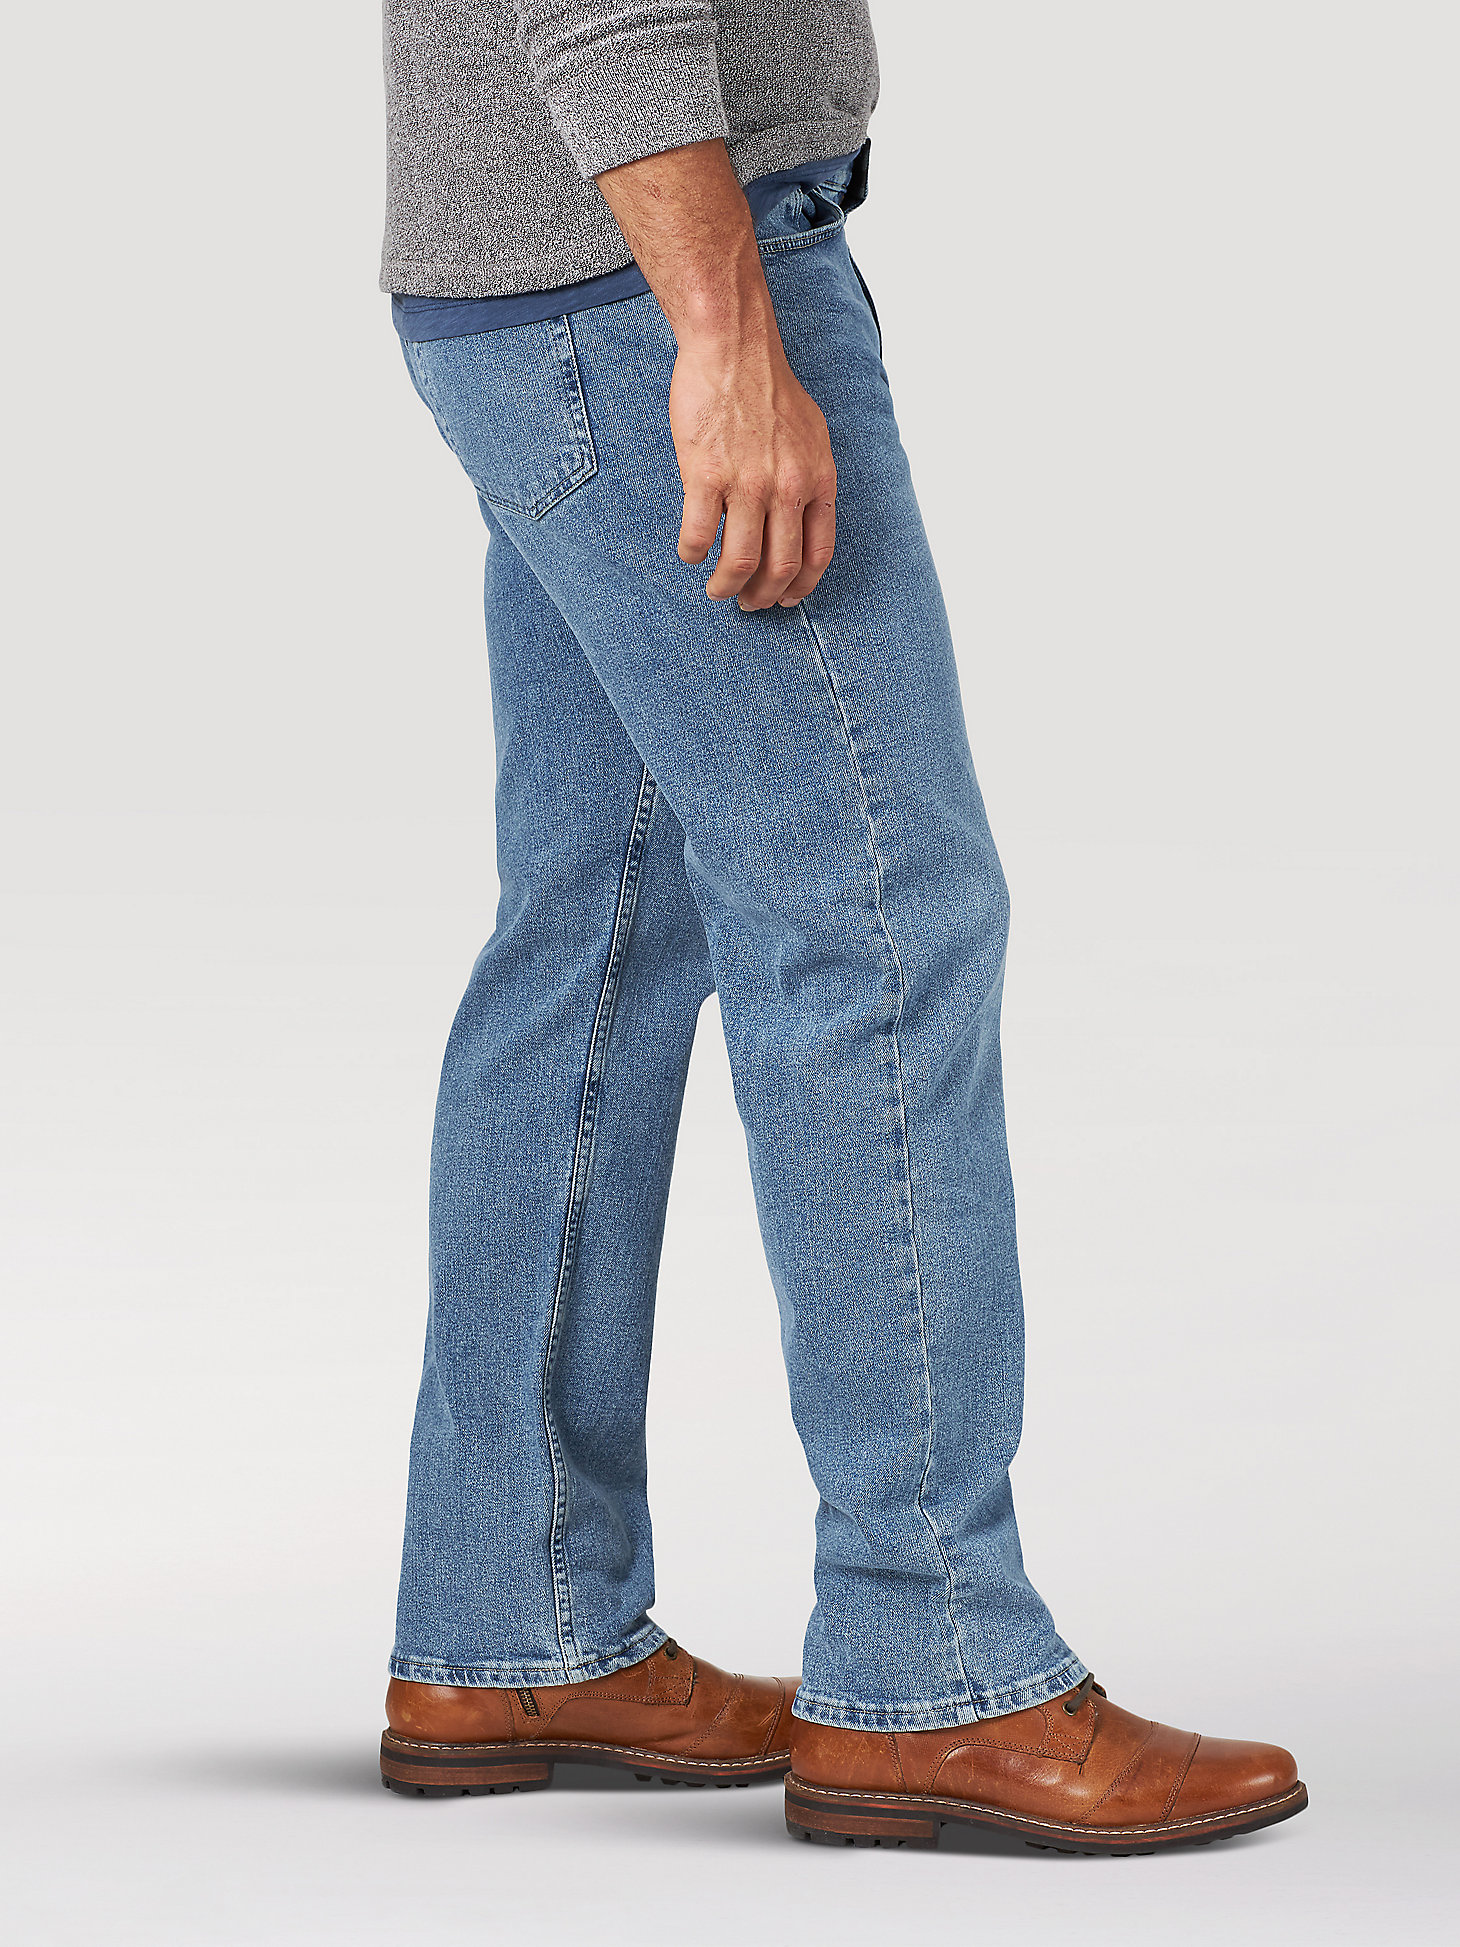 Wrangler® Men's Five Star Premium Performance Series Relaxed Fit Jean in Boulder alternative view 2